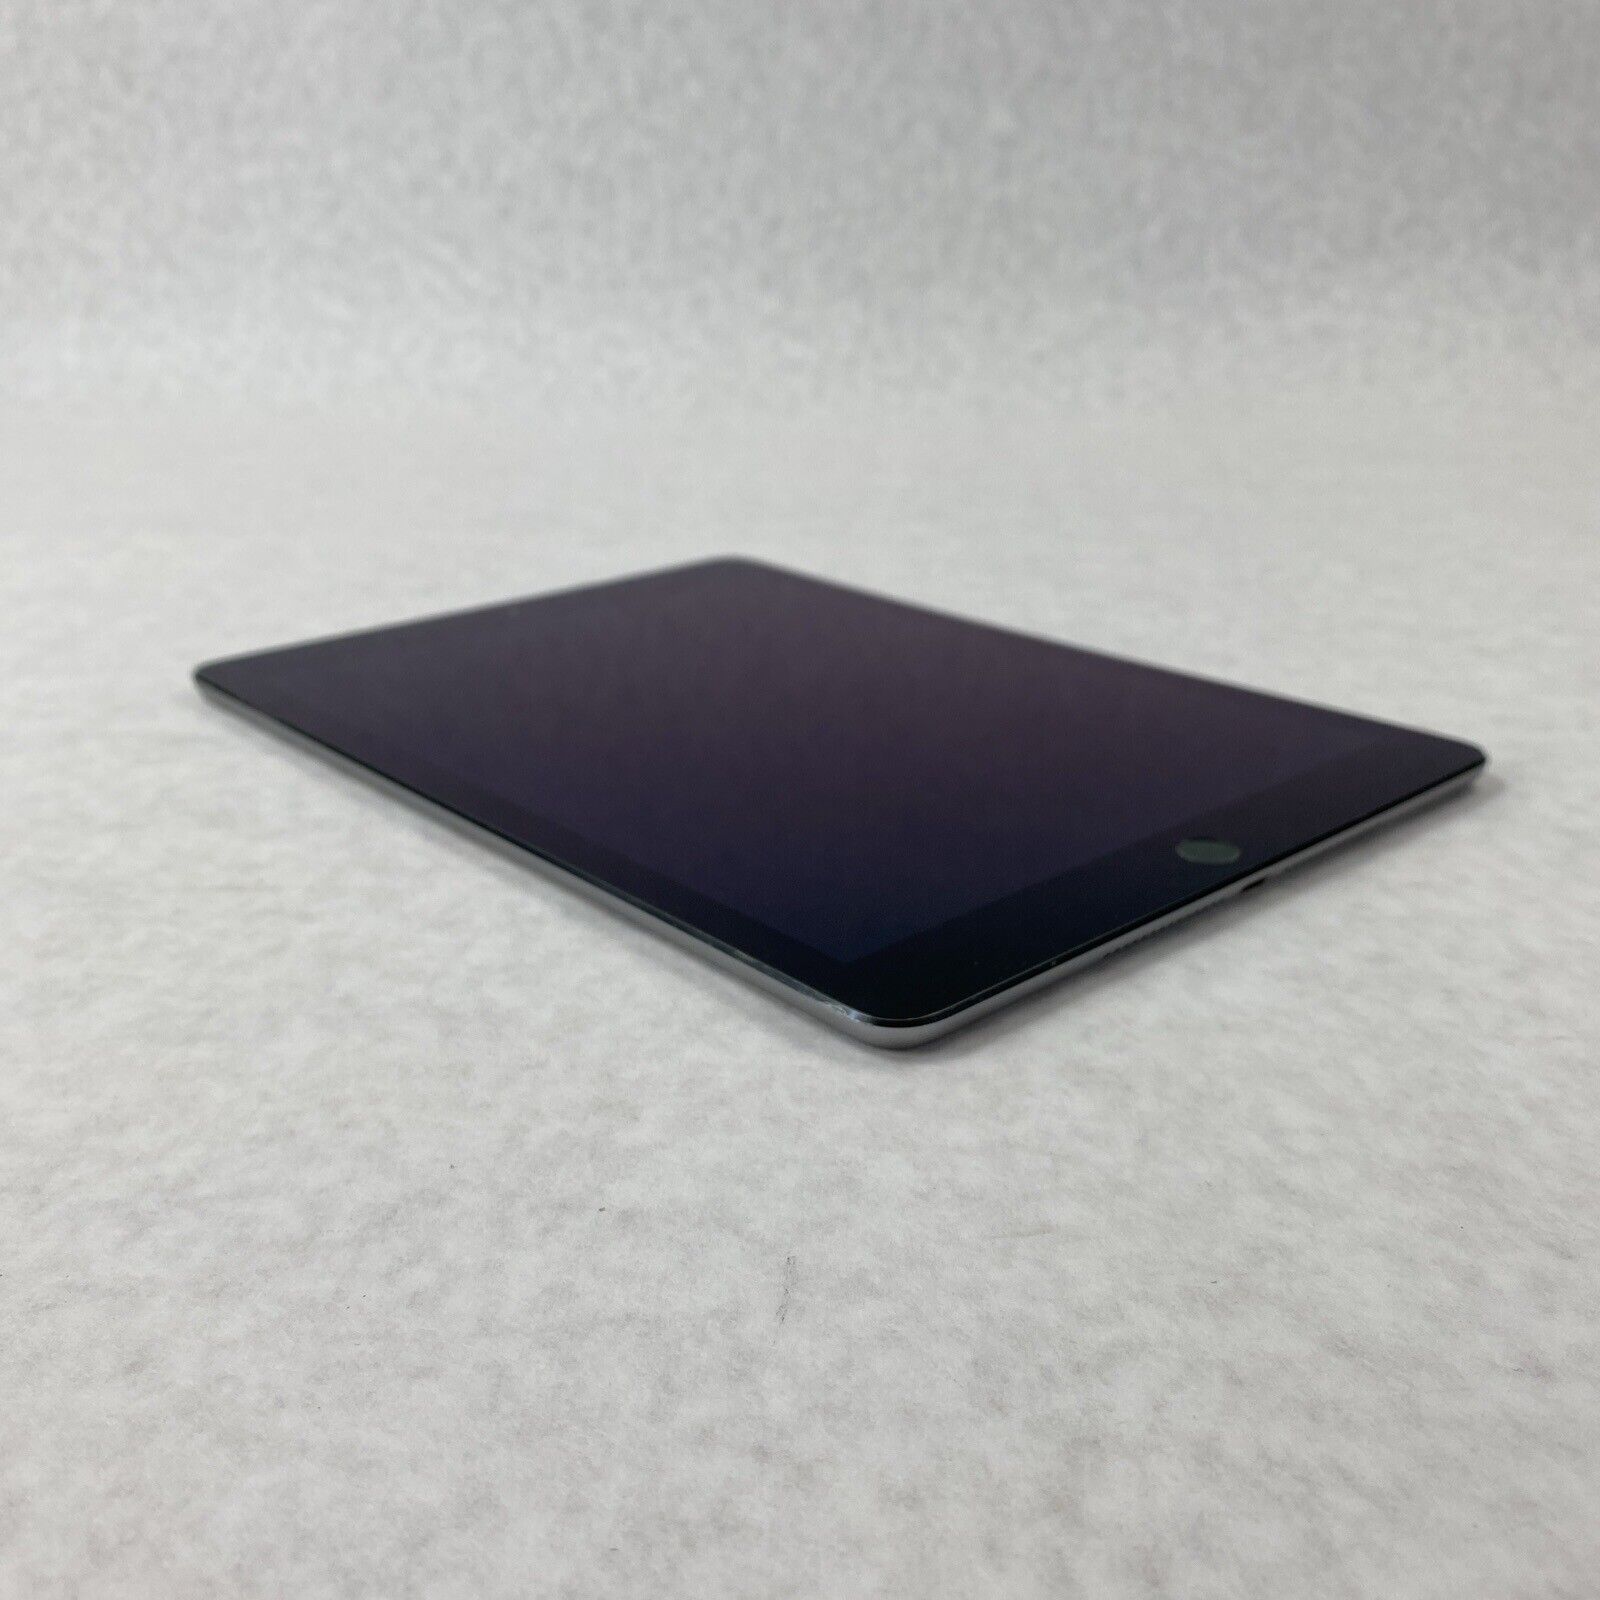 Apple iPad Air 2 A1566 9.7" 64GB Wi-Fi Space Gray - Tested